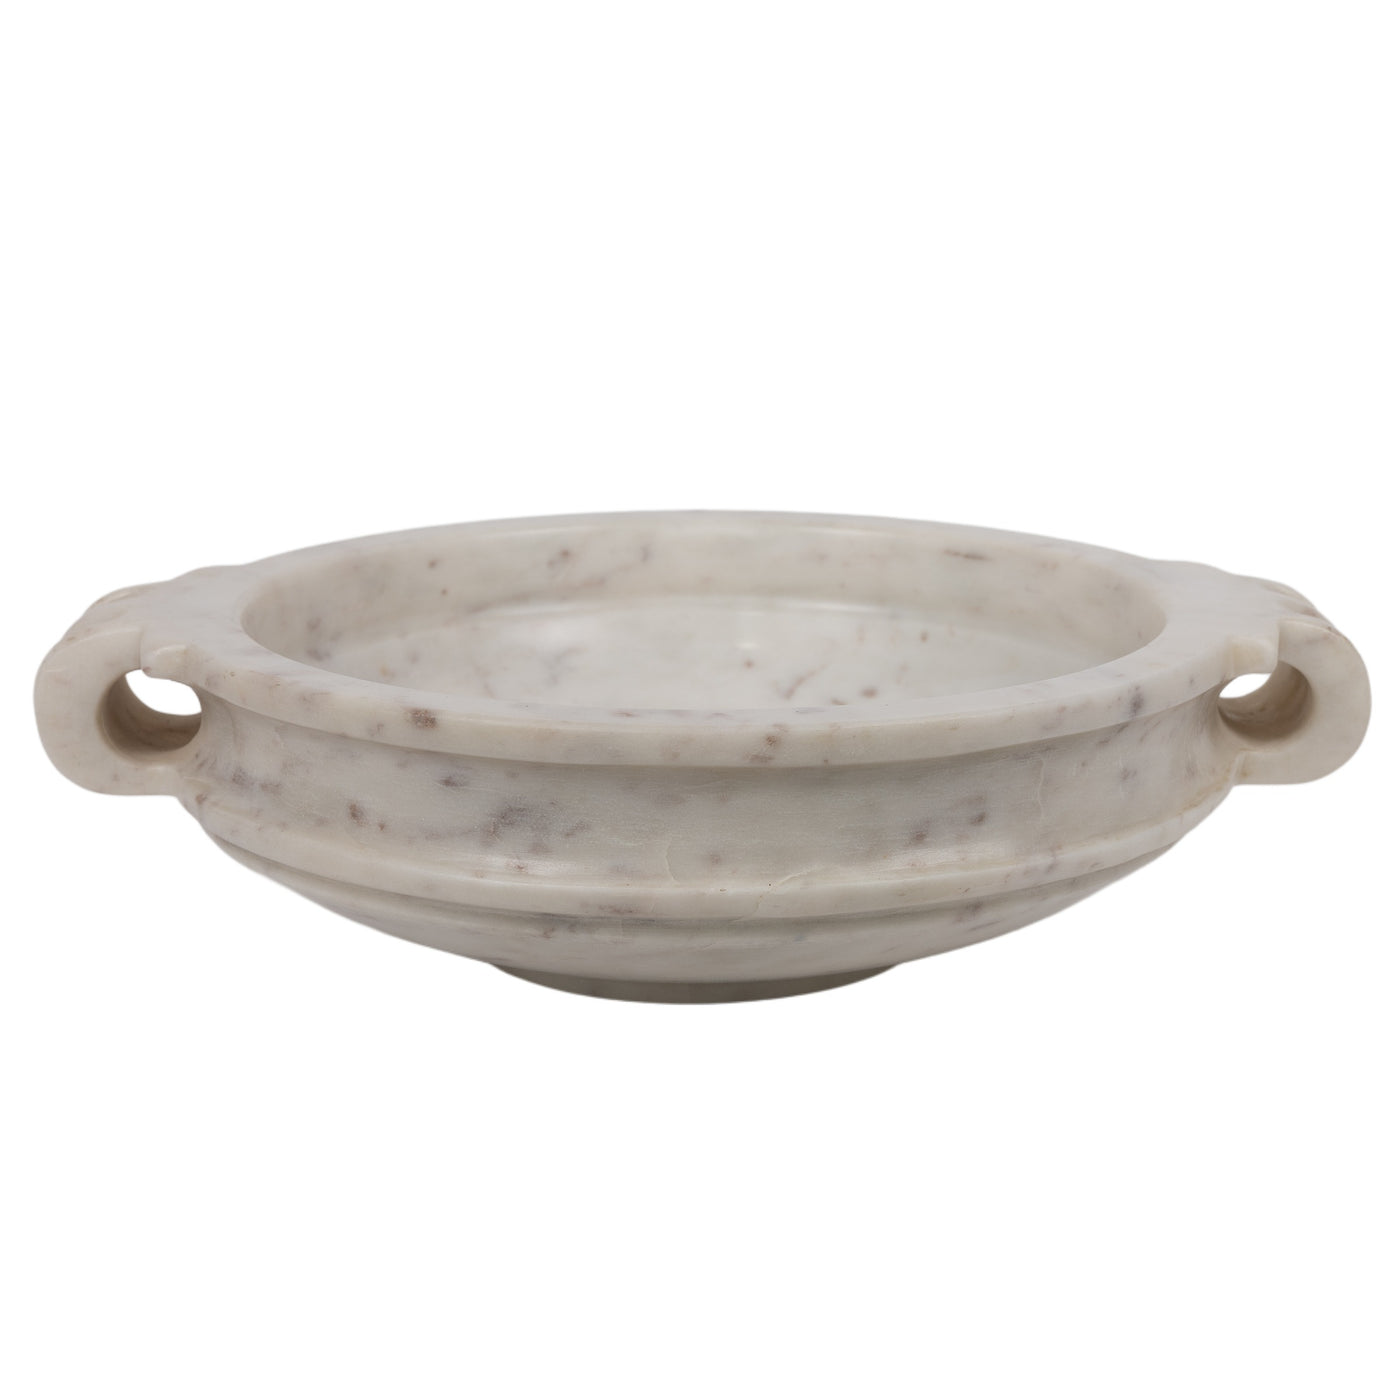 Marble Urli Bowl